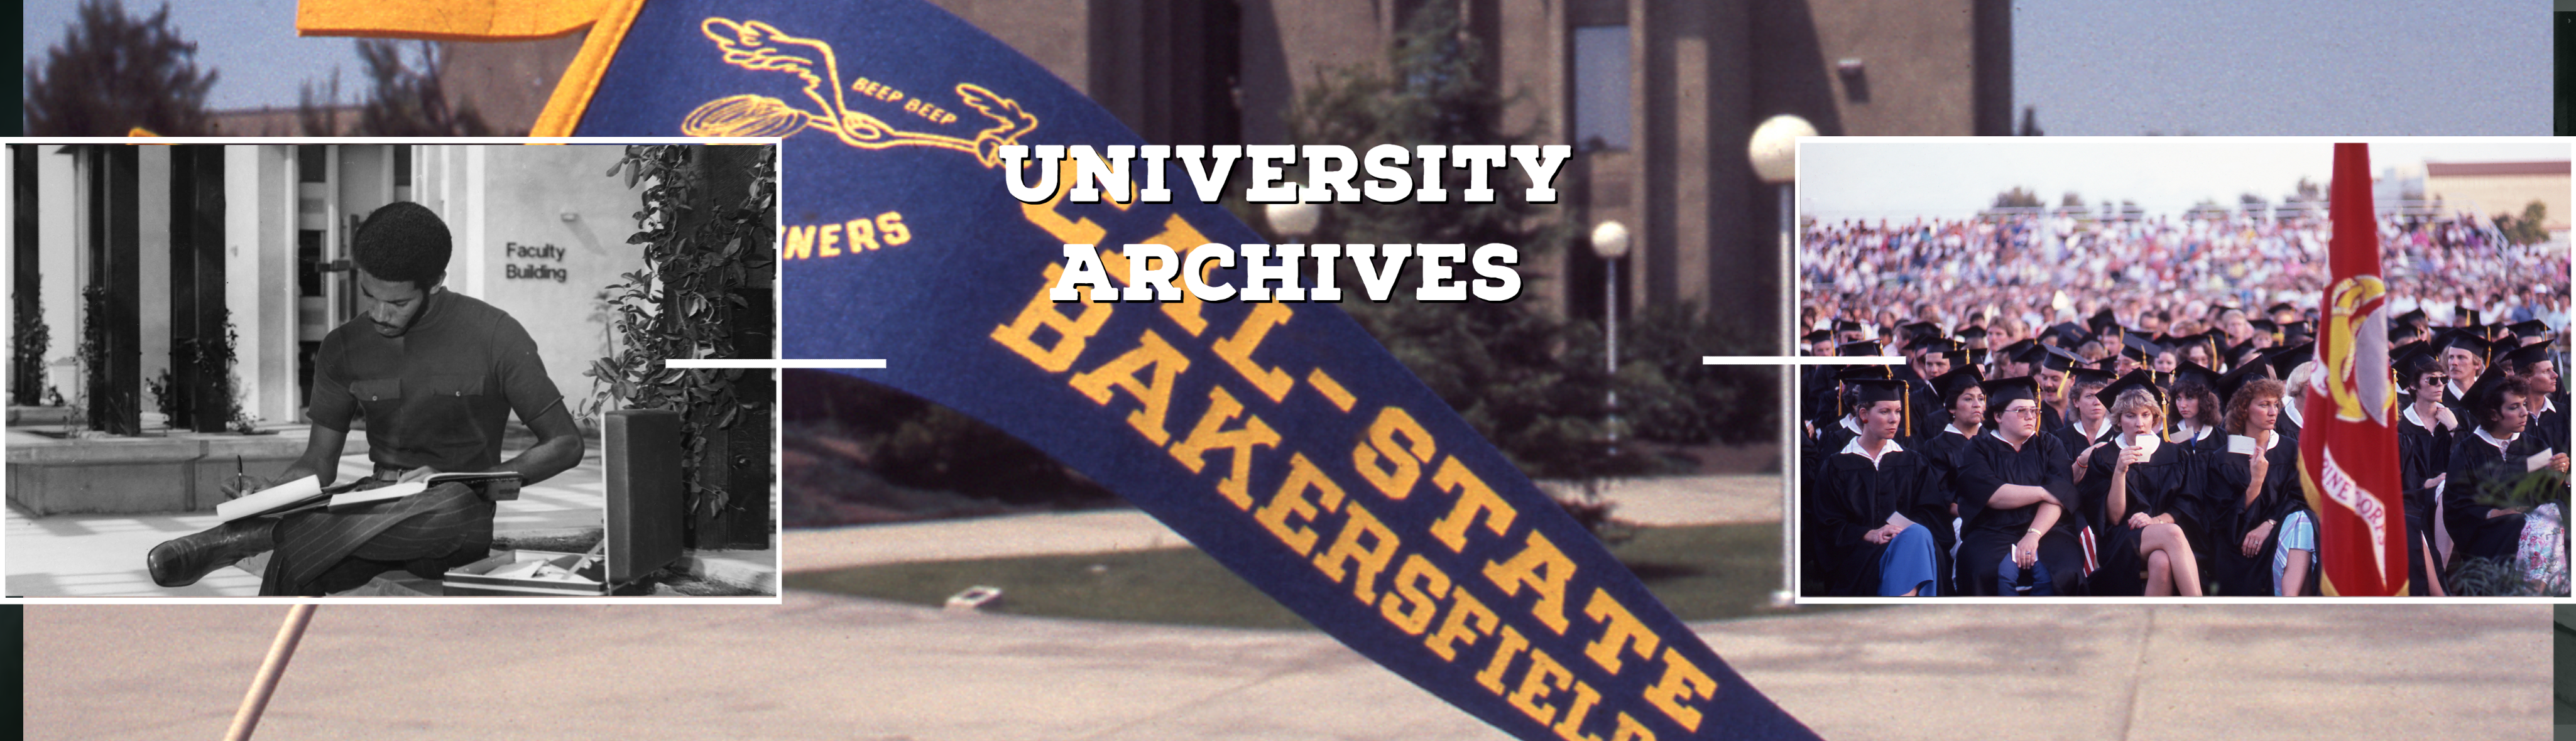 University Archives Banner